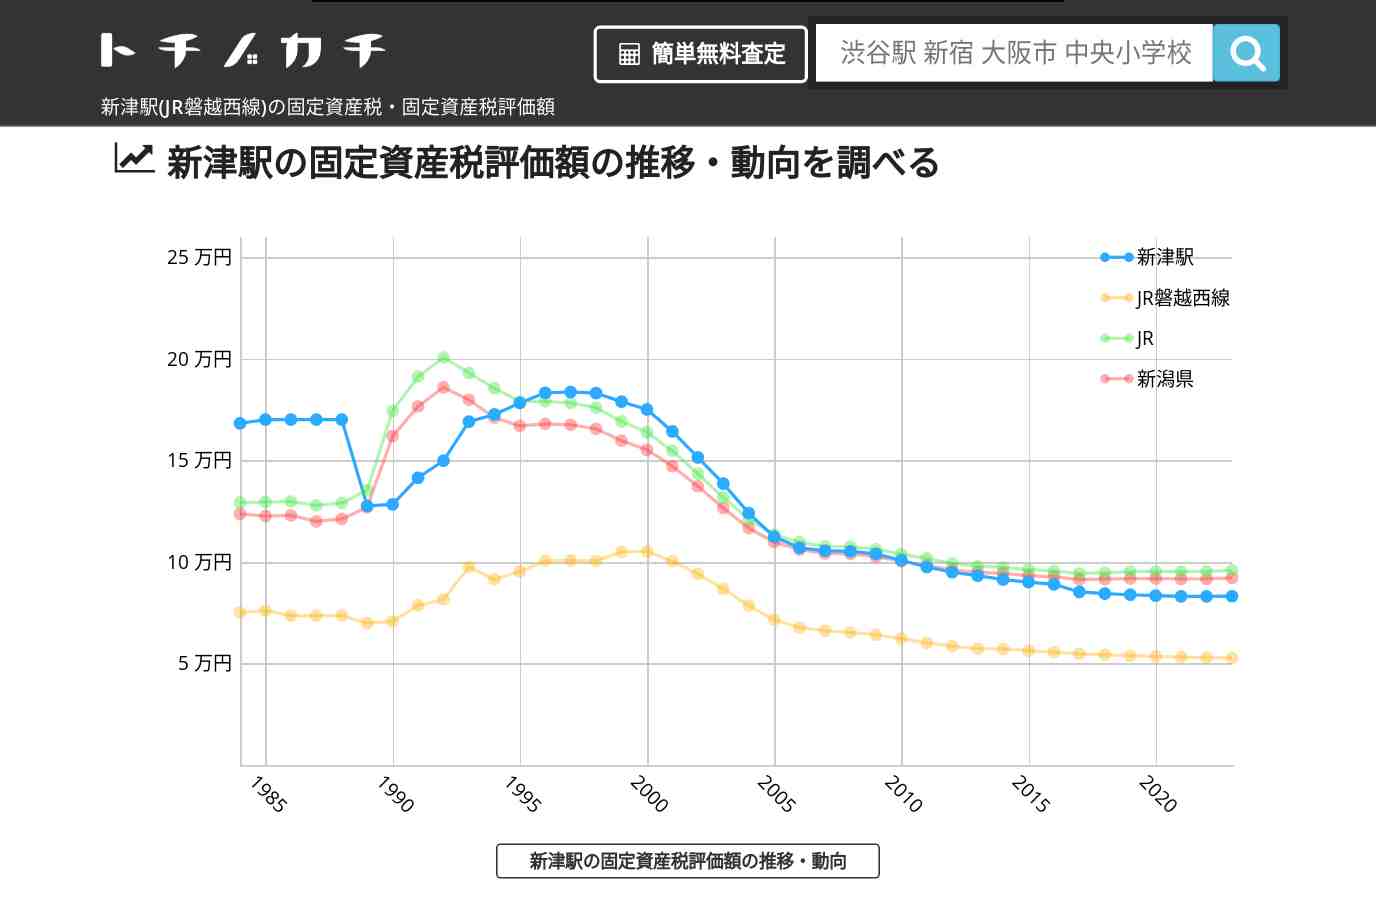 新津駅(JR磐越西線)の固定資産税・固定資産税評価額 | トチノカチ